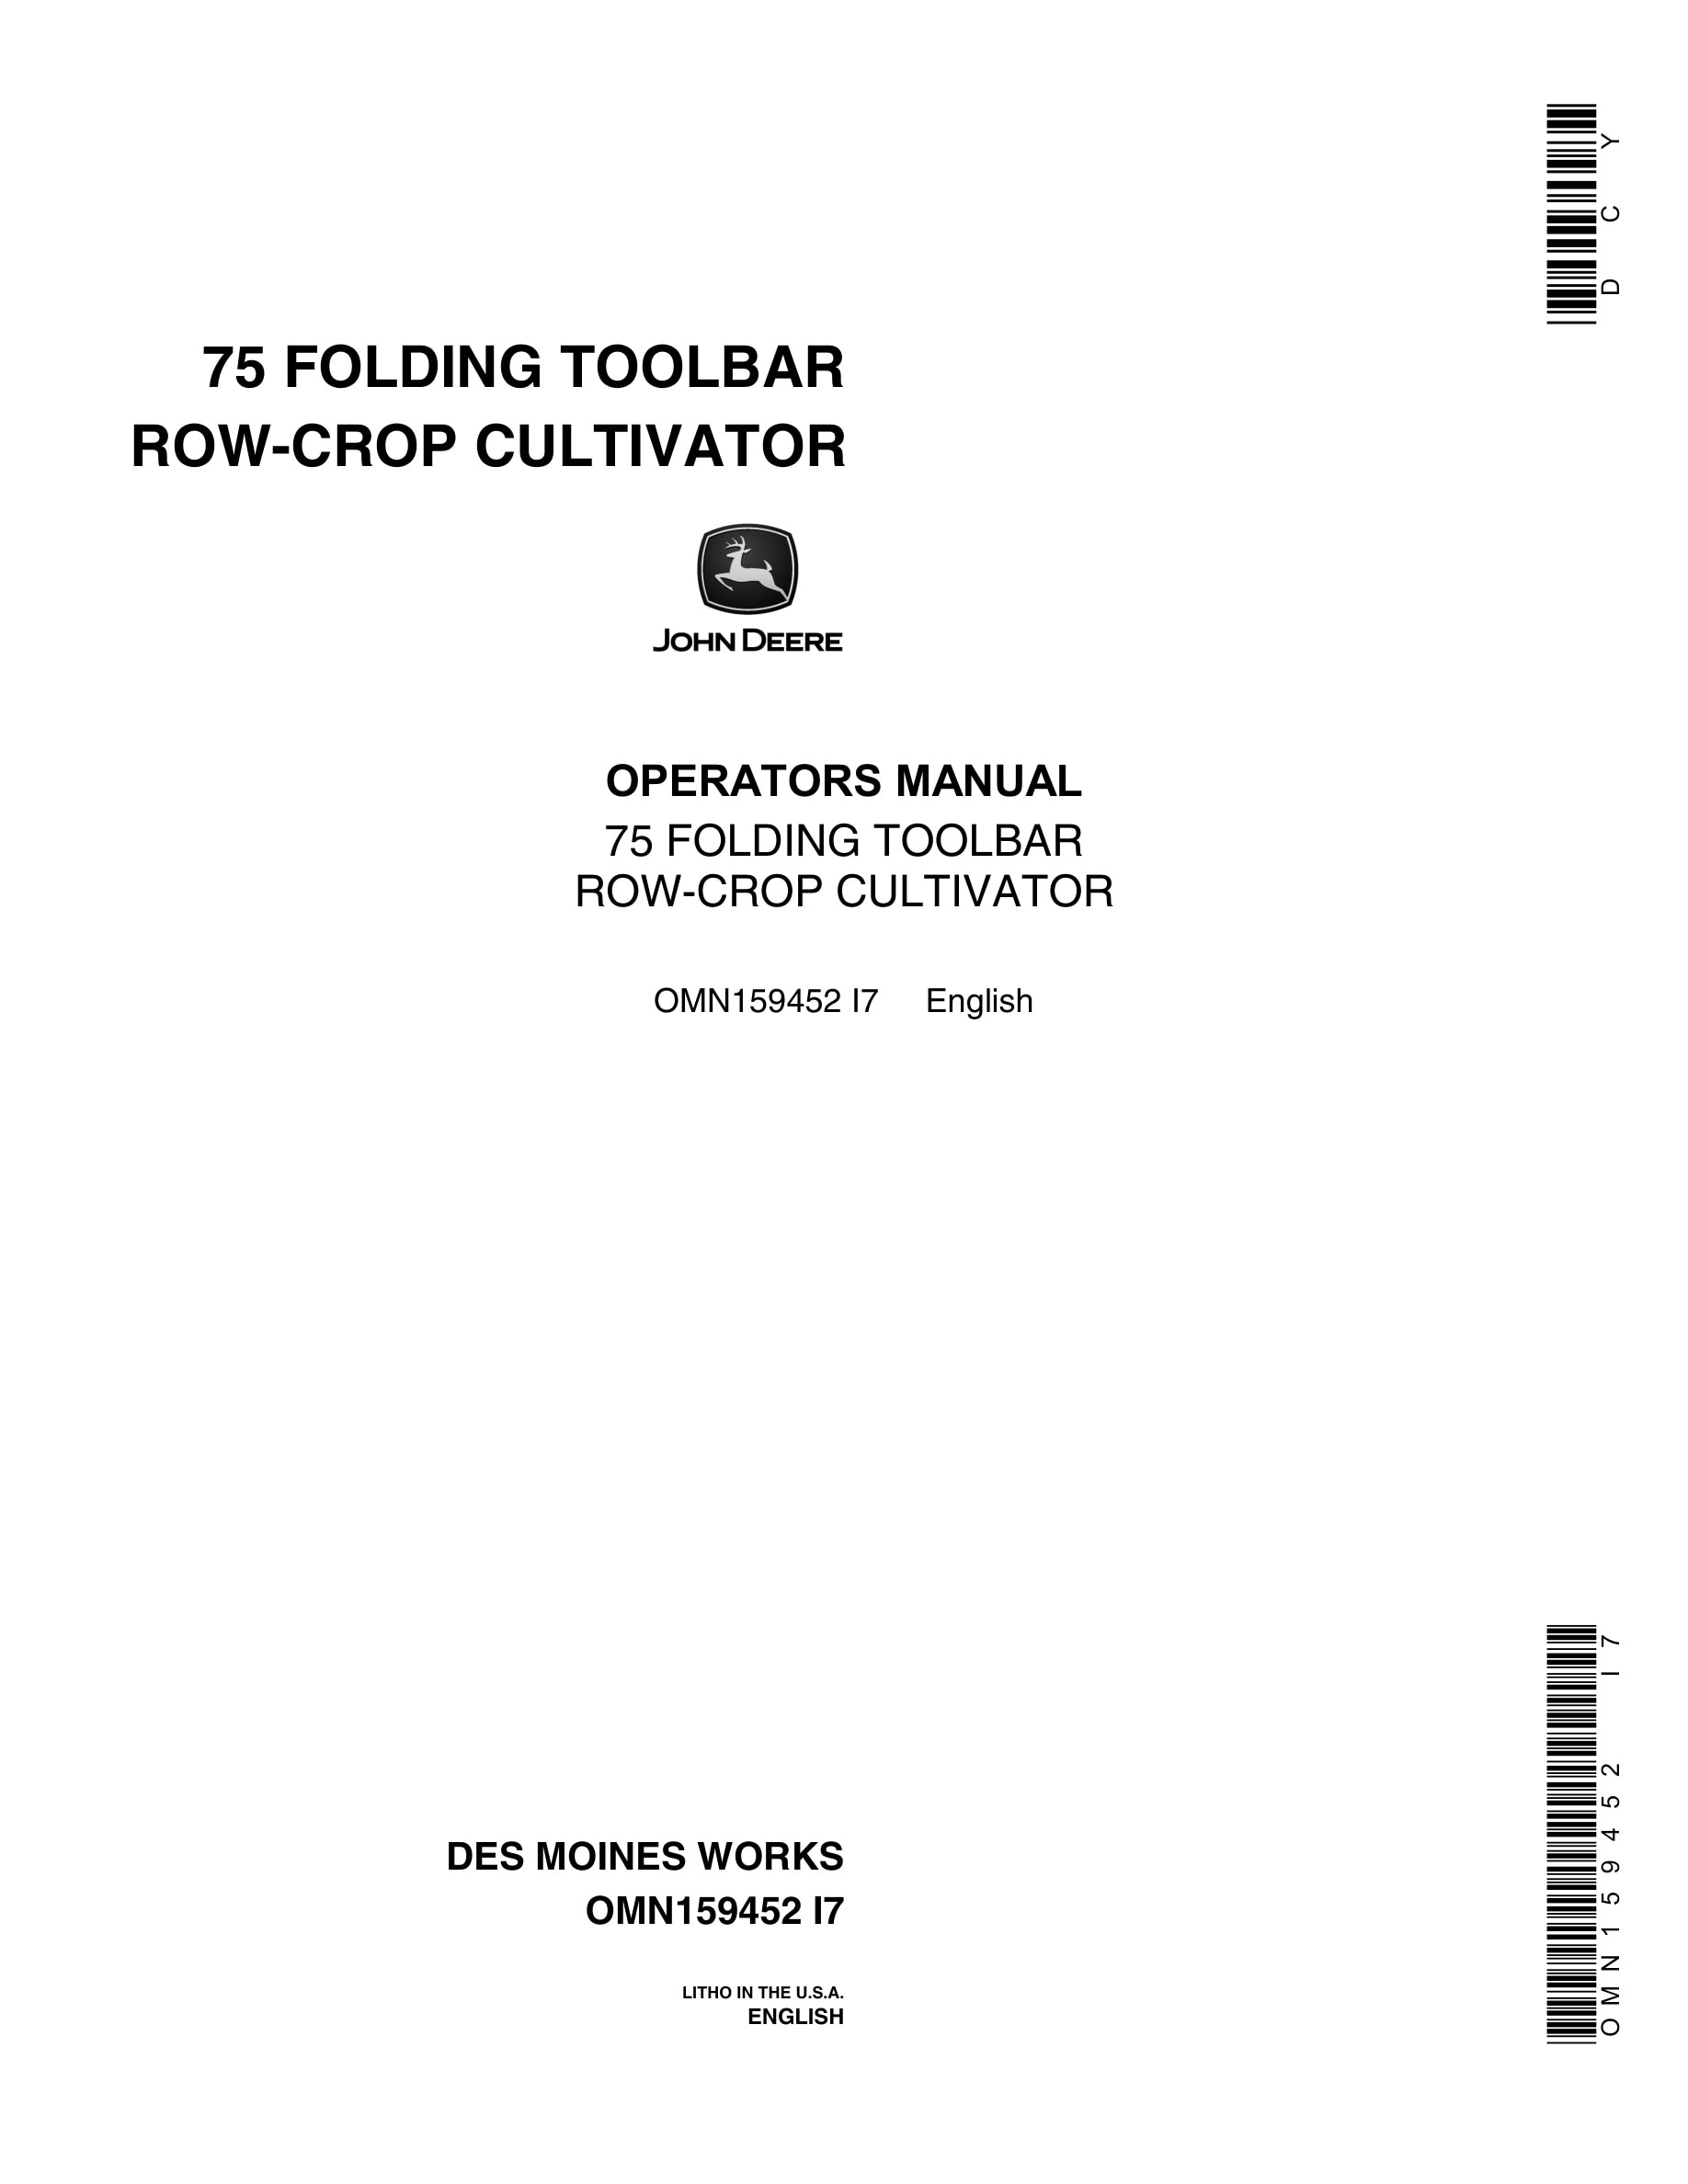 John Deere 75 FOLDING TOOLBAR ROW-CROP CULTIVATOR Operator Manual OMN159452-1